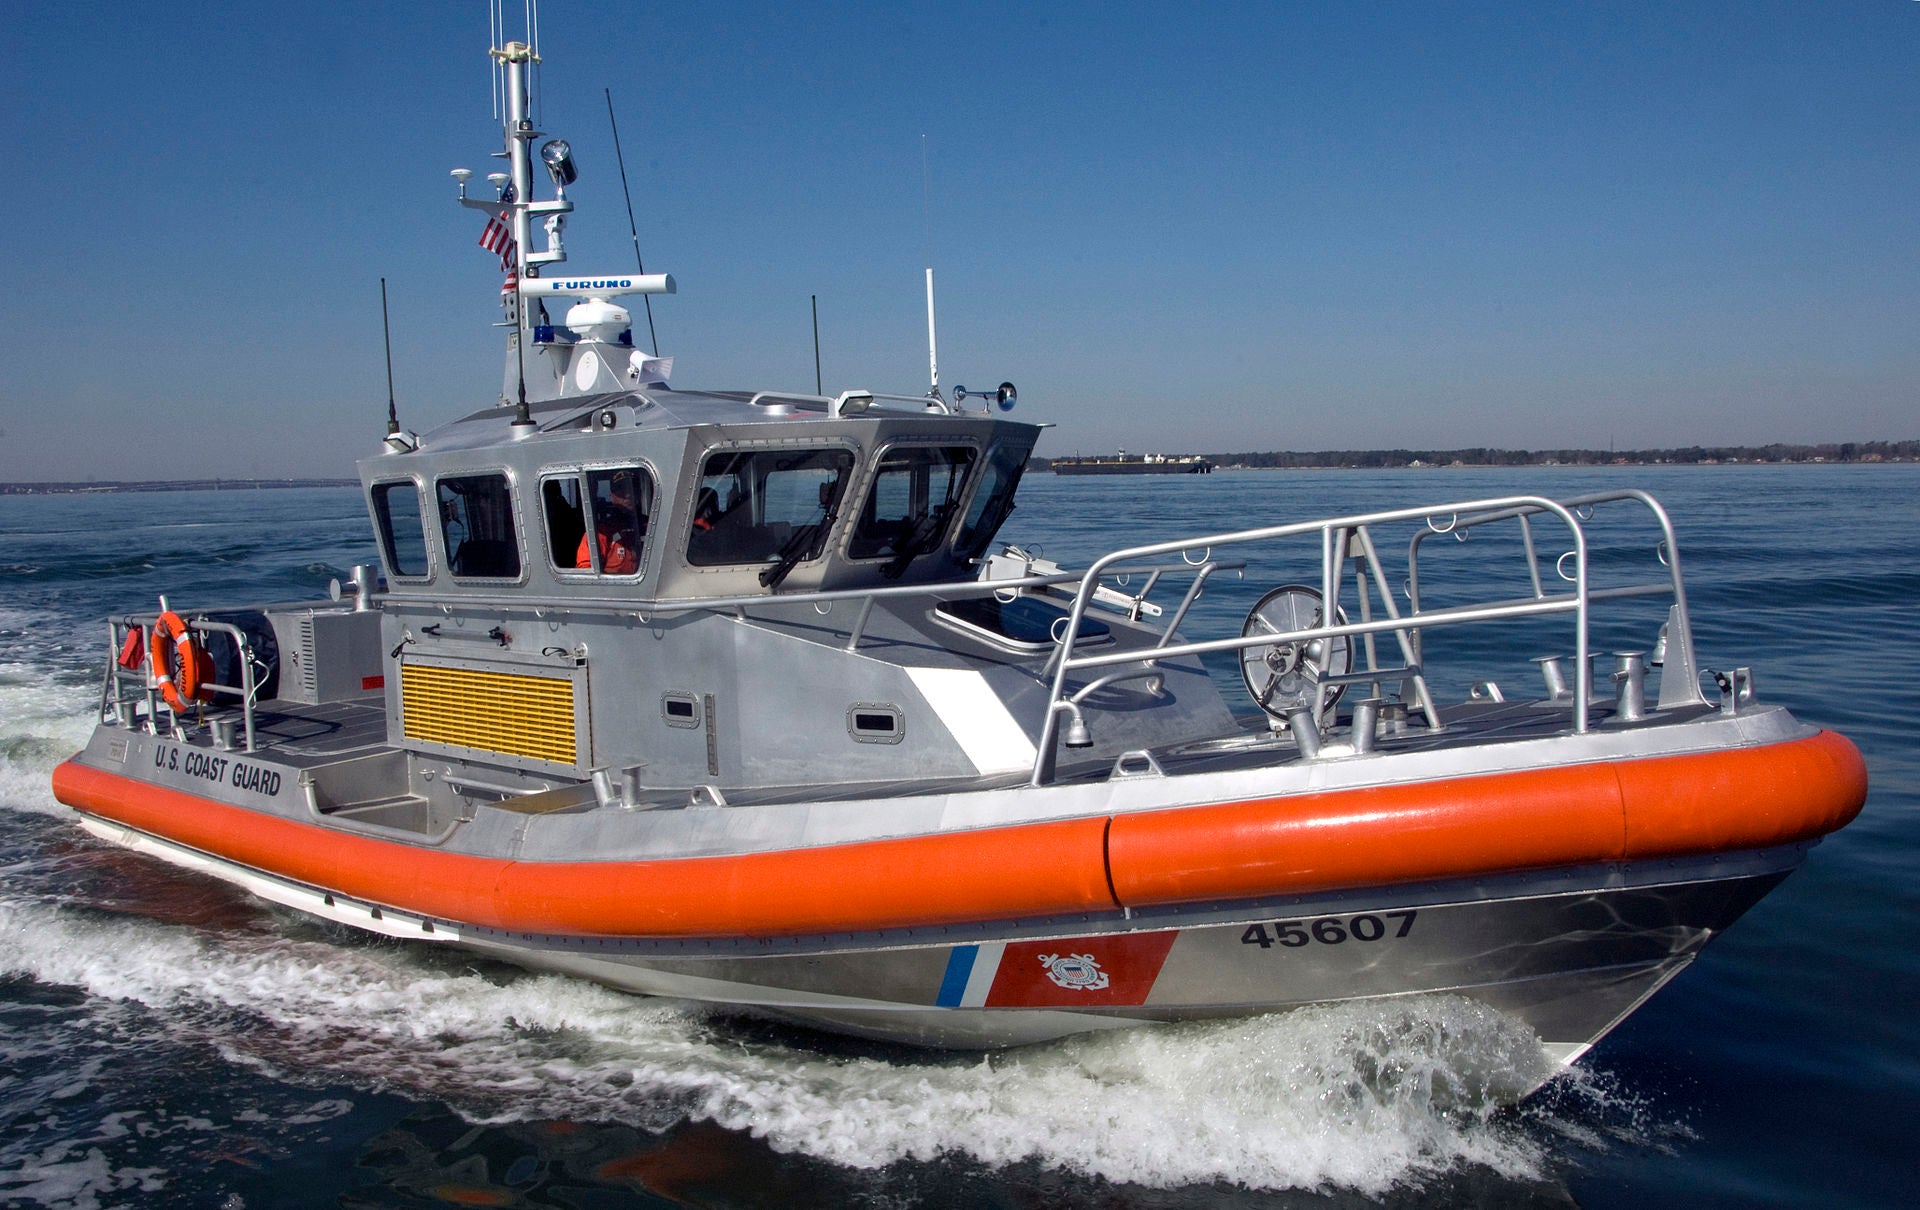  U.S. Coast Guard image.  